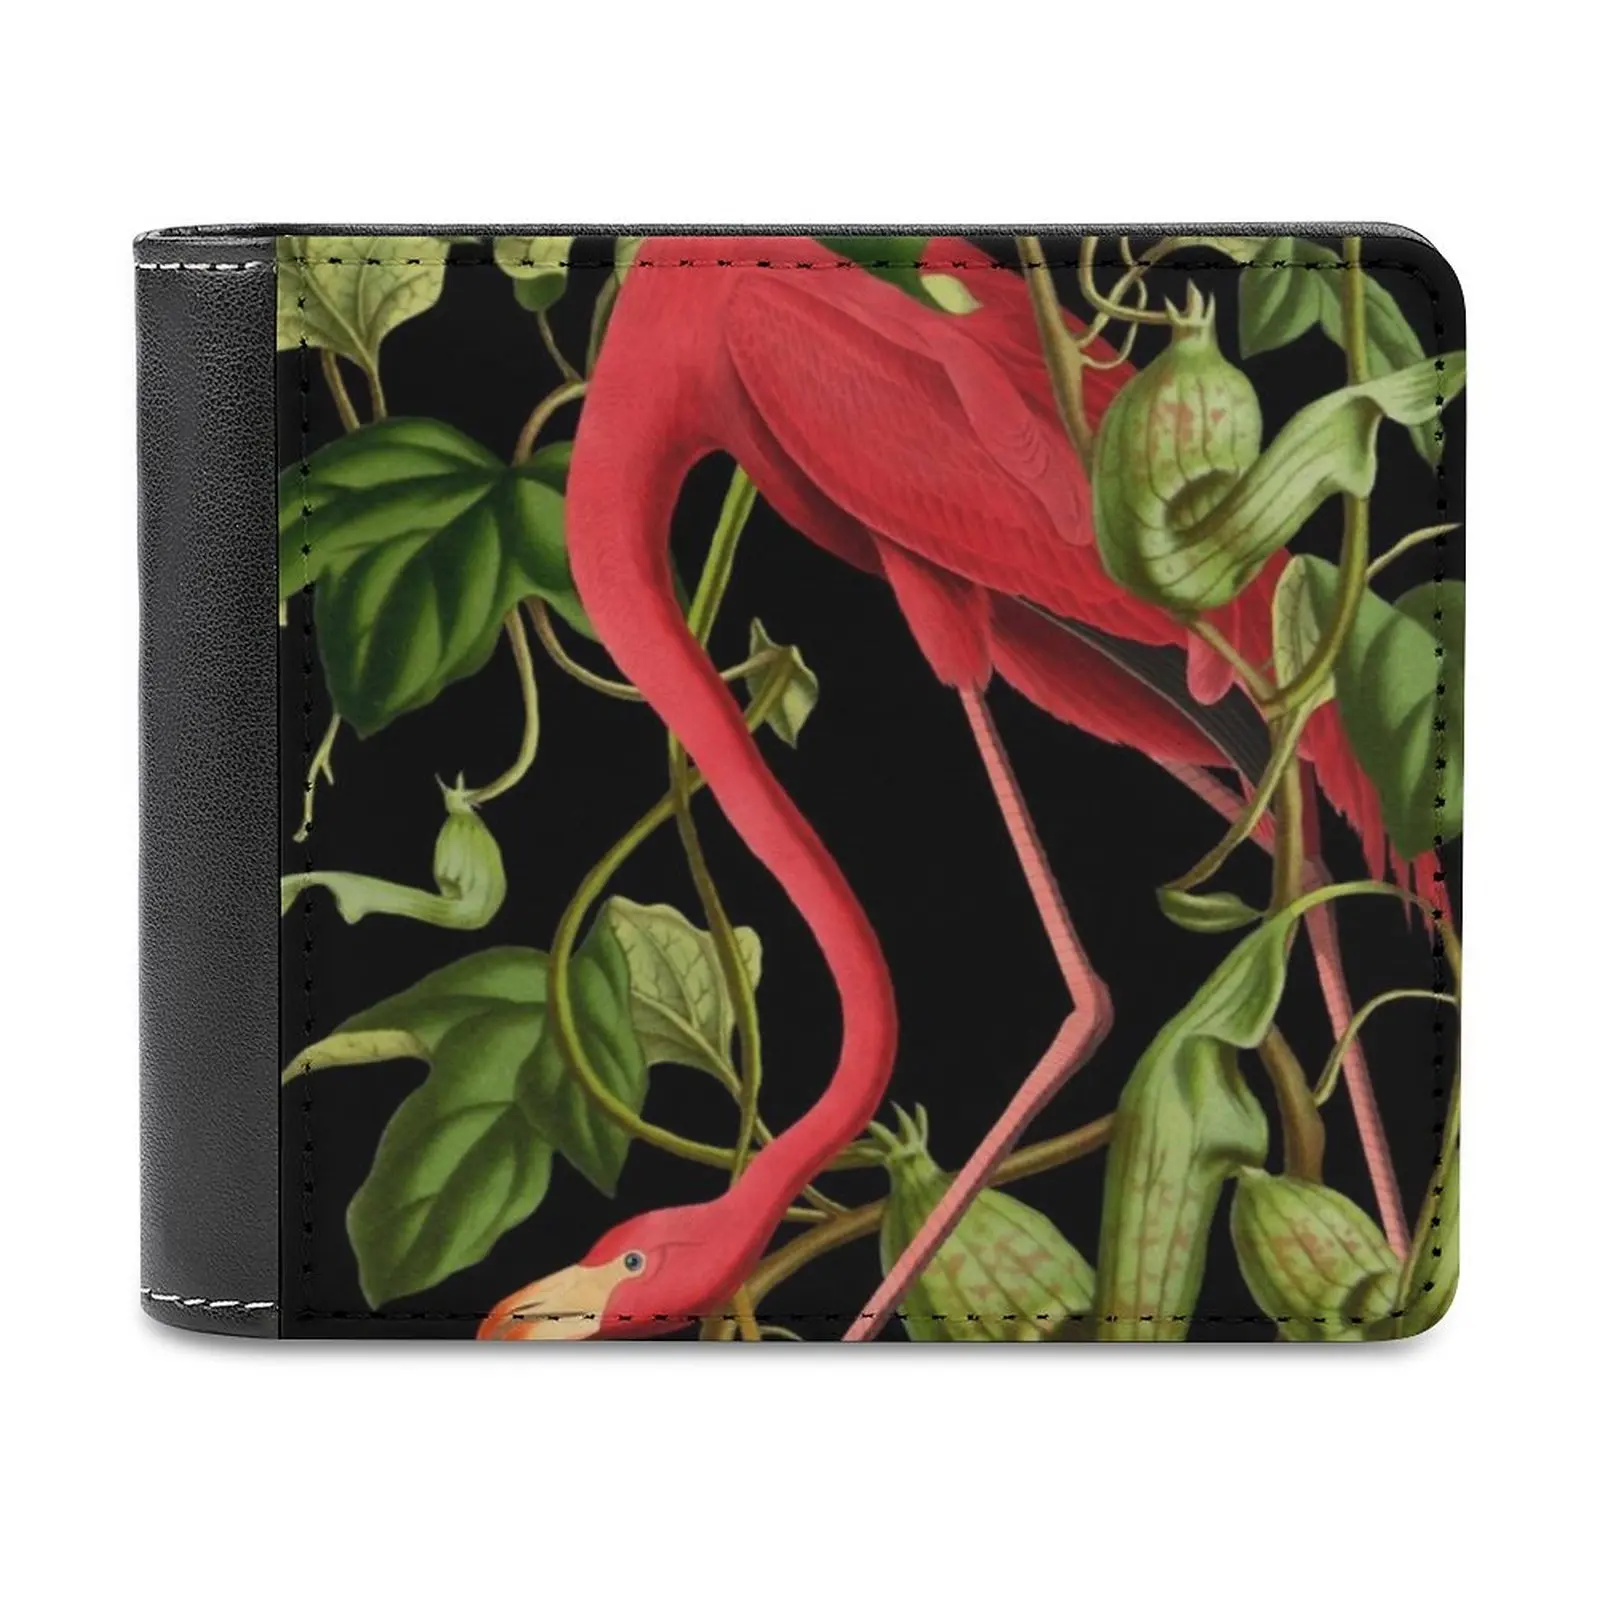 

Flamingo Men's Wallet Purses Wallets New Design Dollar Price Top Men Leather Wallet Flamingo Pink Jungle Plants Tropical Exotic